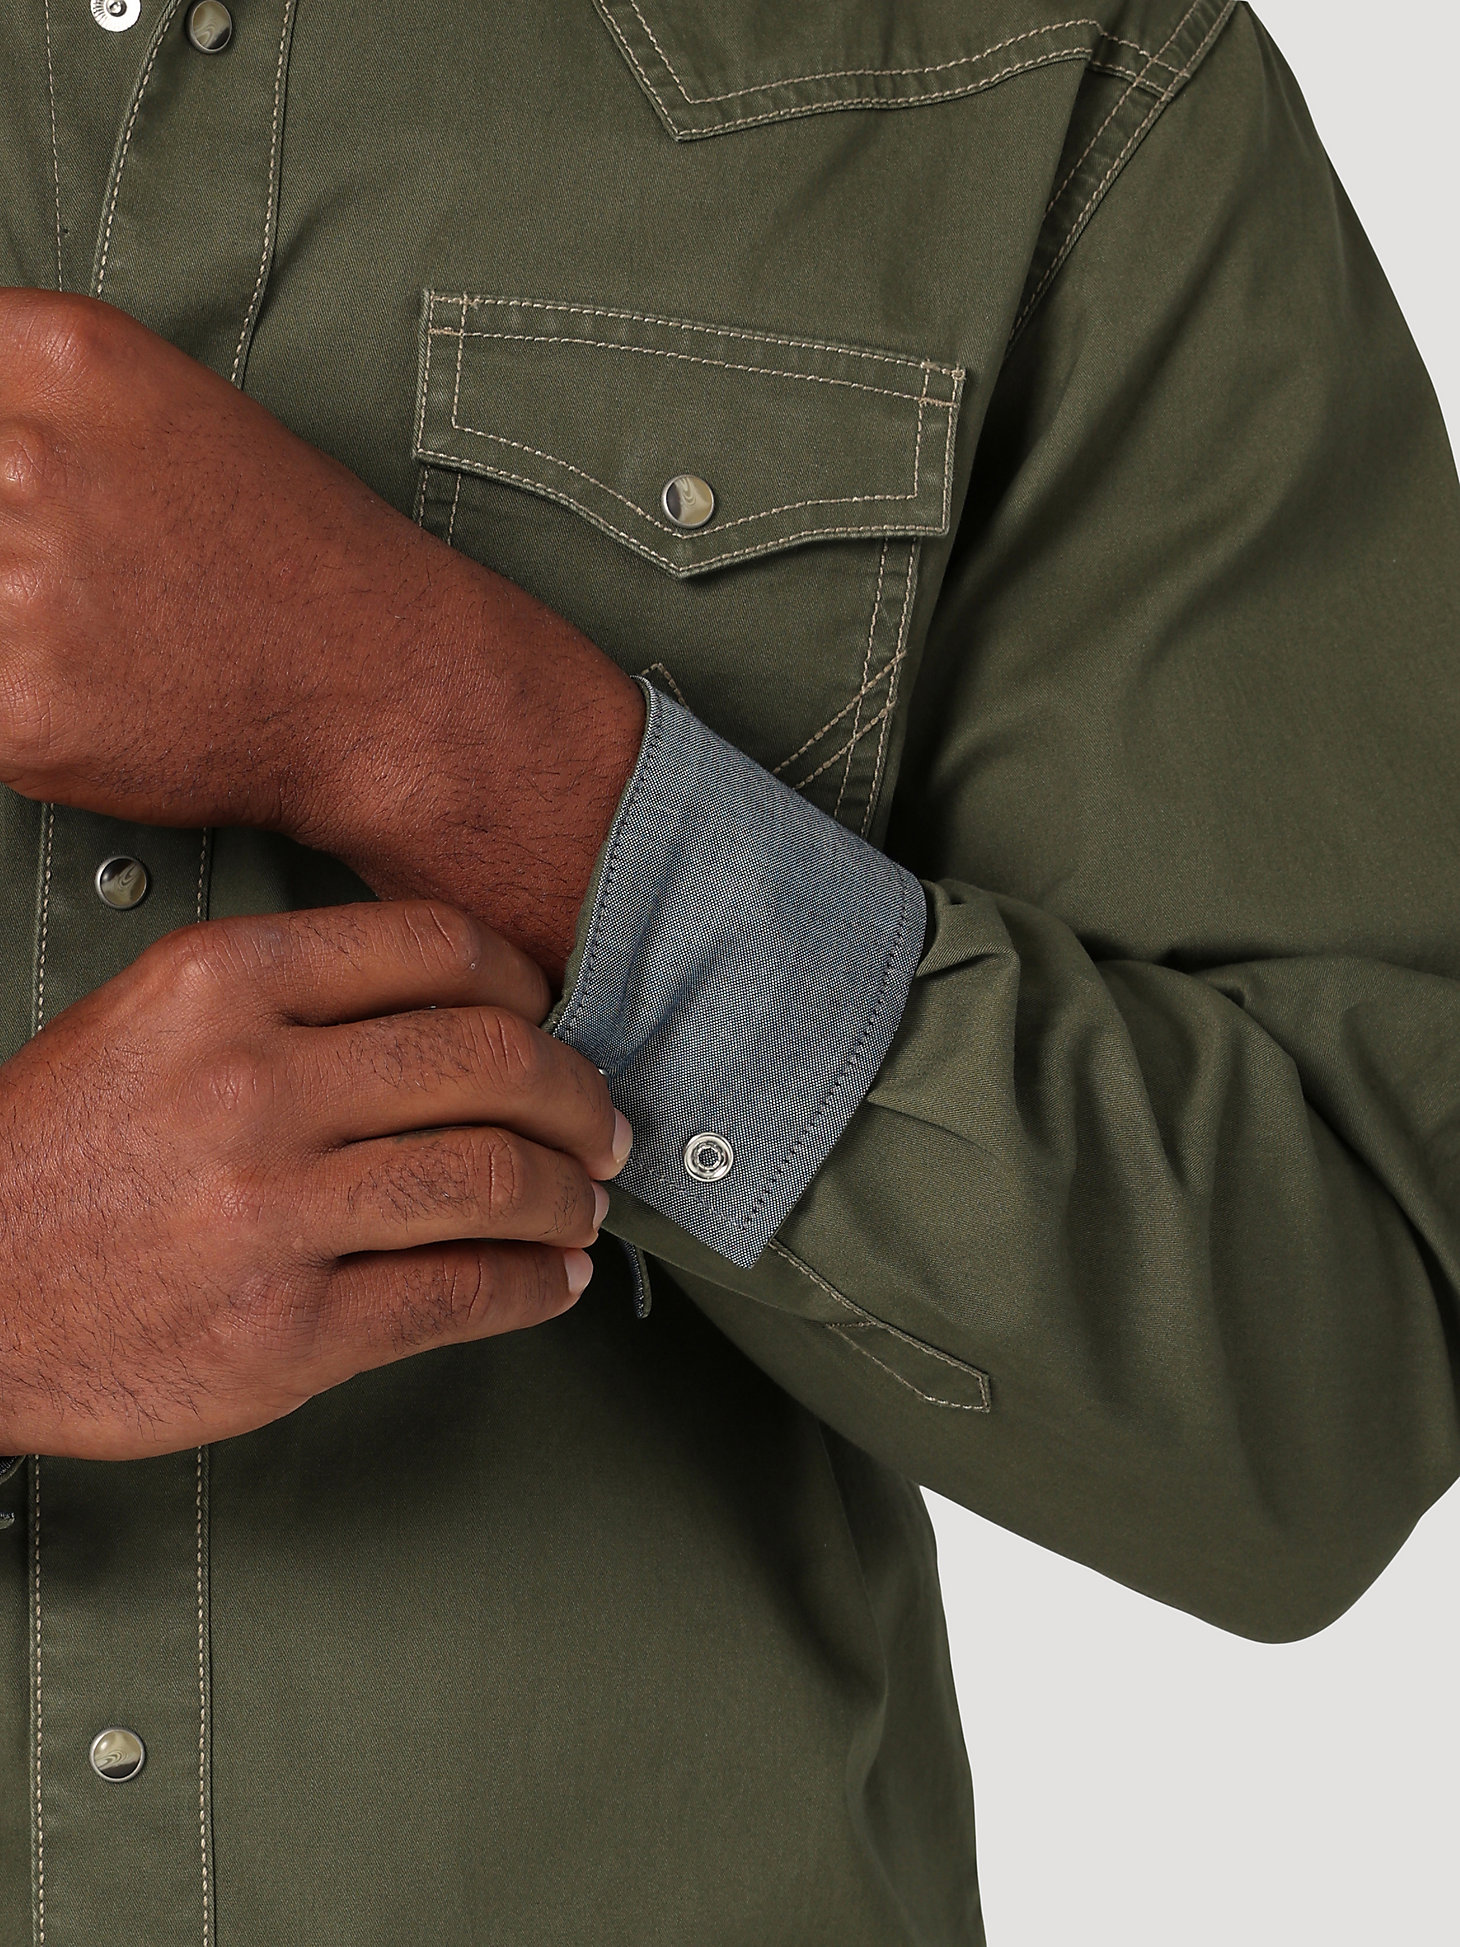 Men's Wrangler Retro Premium Western Snap Solid Shirt in Grape Leaf alternative view 3